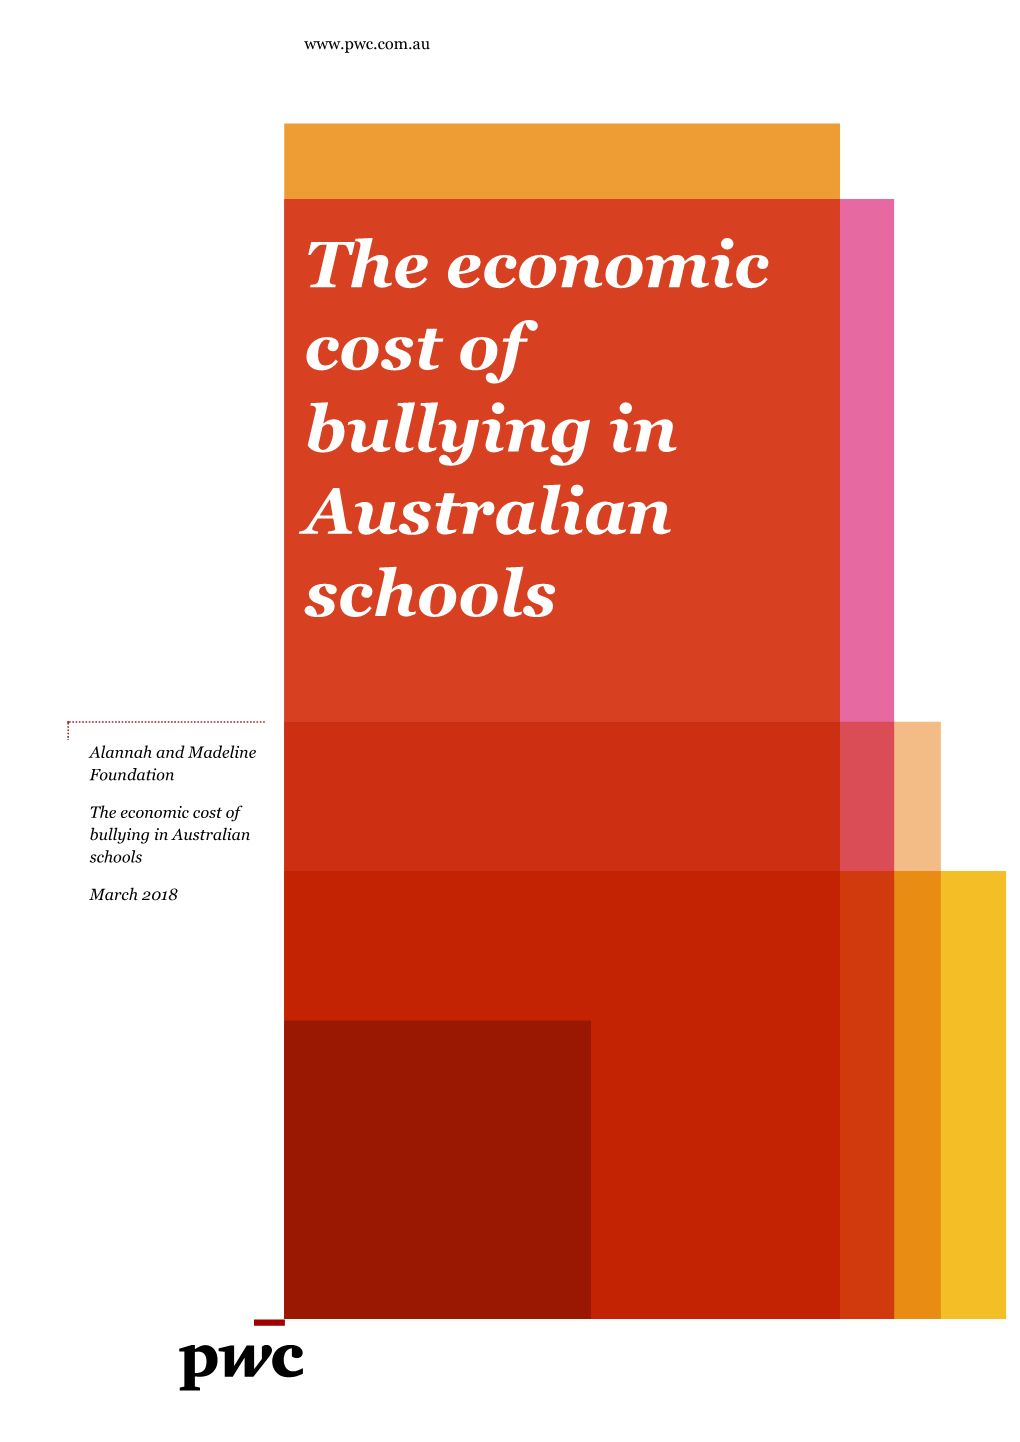 The Economic Cost of Bullying in Australian Schools